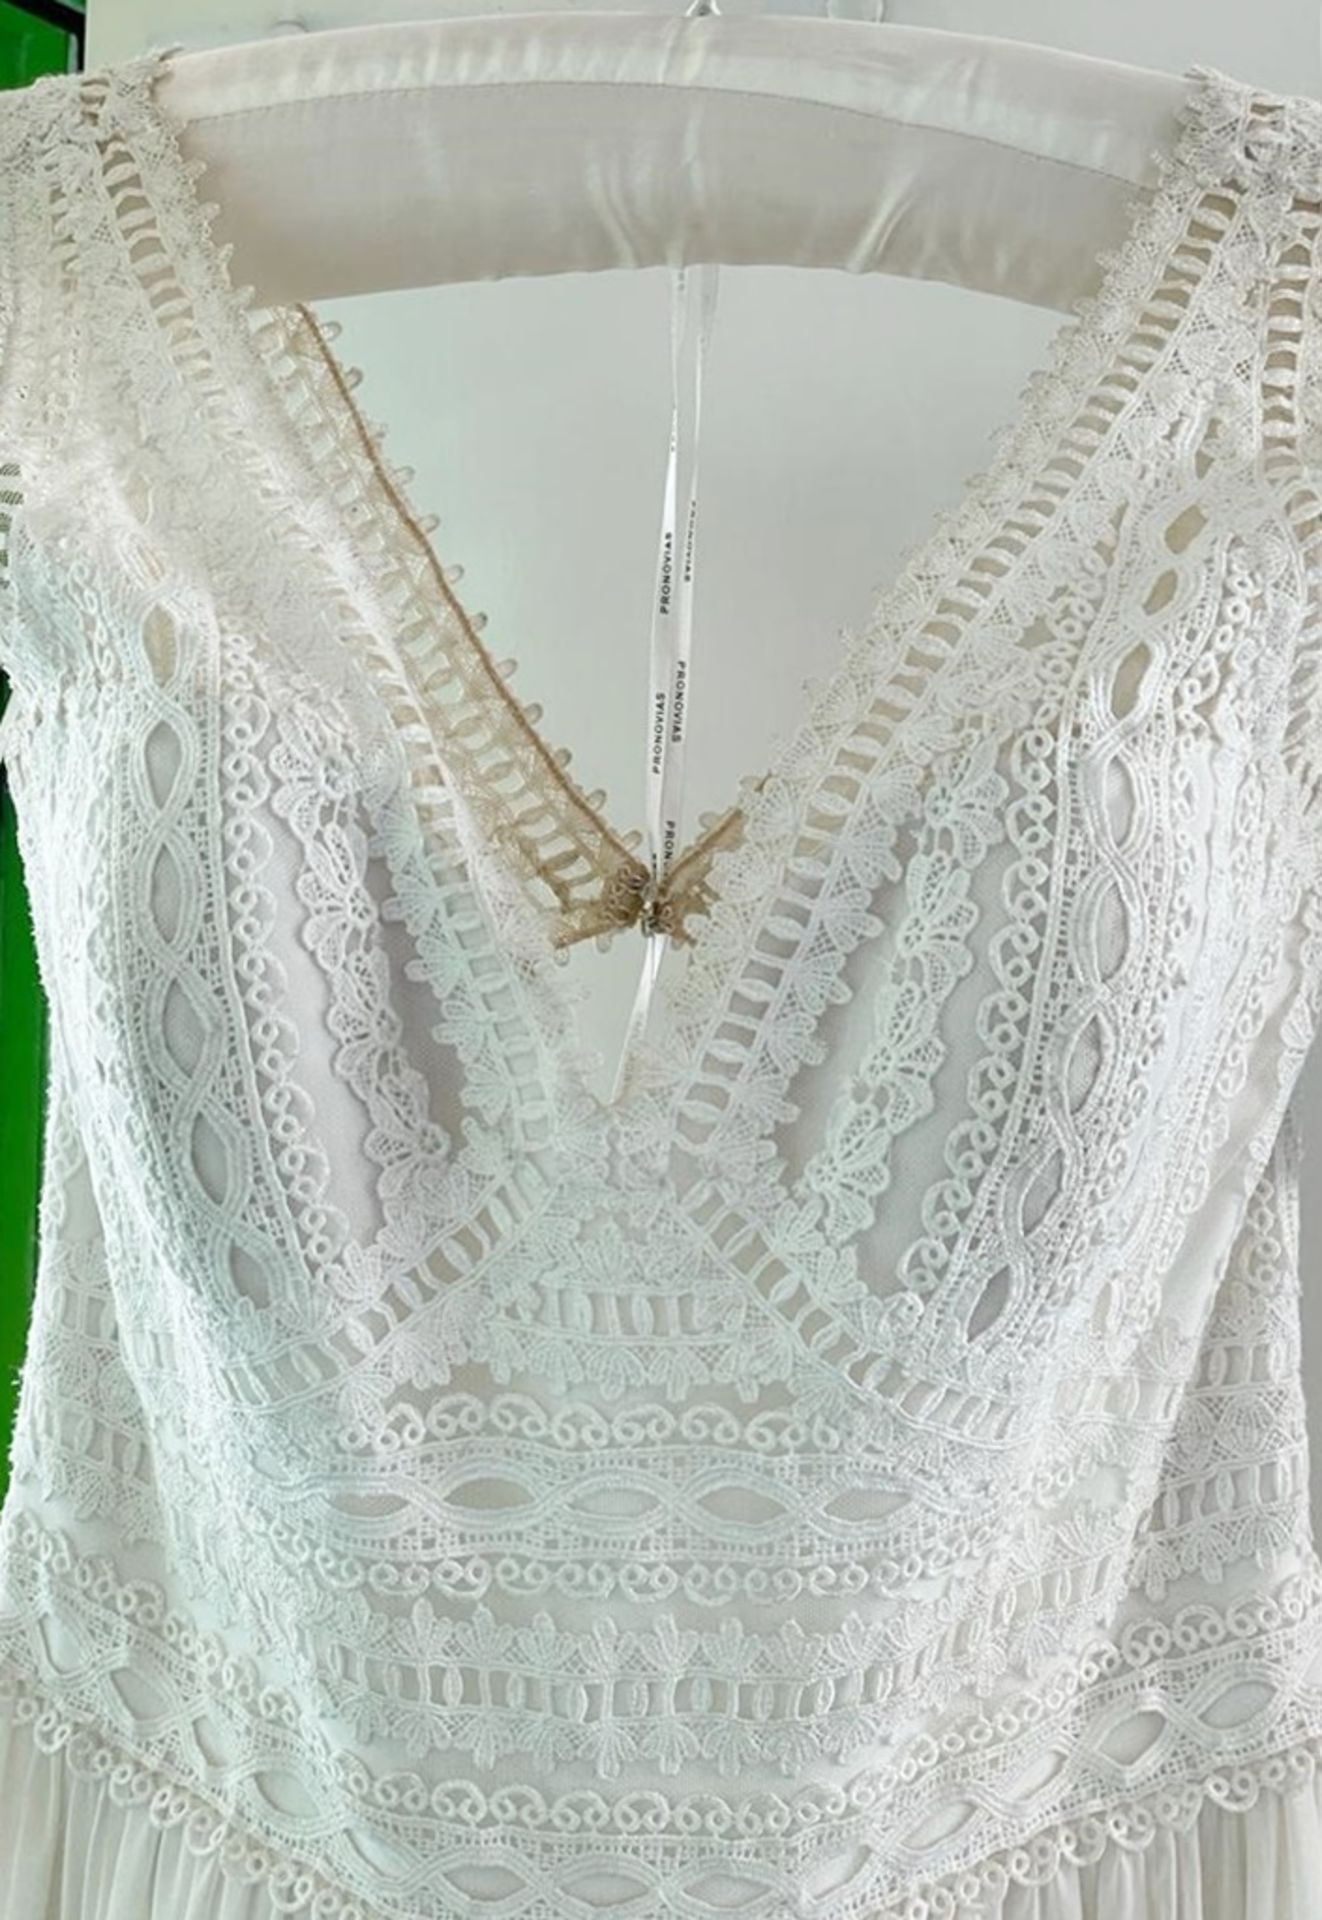 1 x PRONOVIAS 'Dramia' Designer Crocheted Lace Wedding Dress Bridal Gown, With Chiffon Gathered - Image 12 of 20